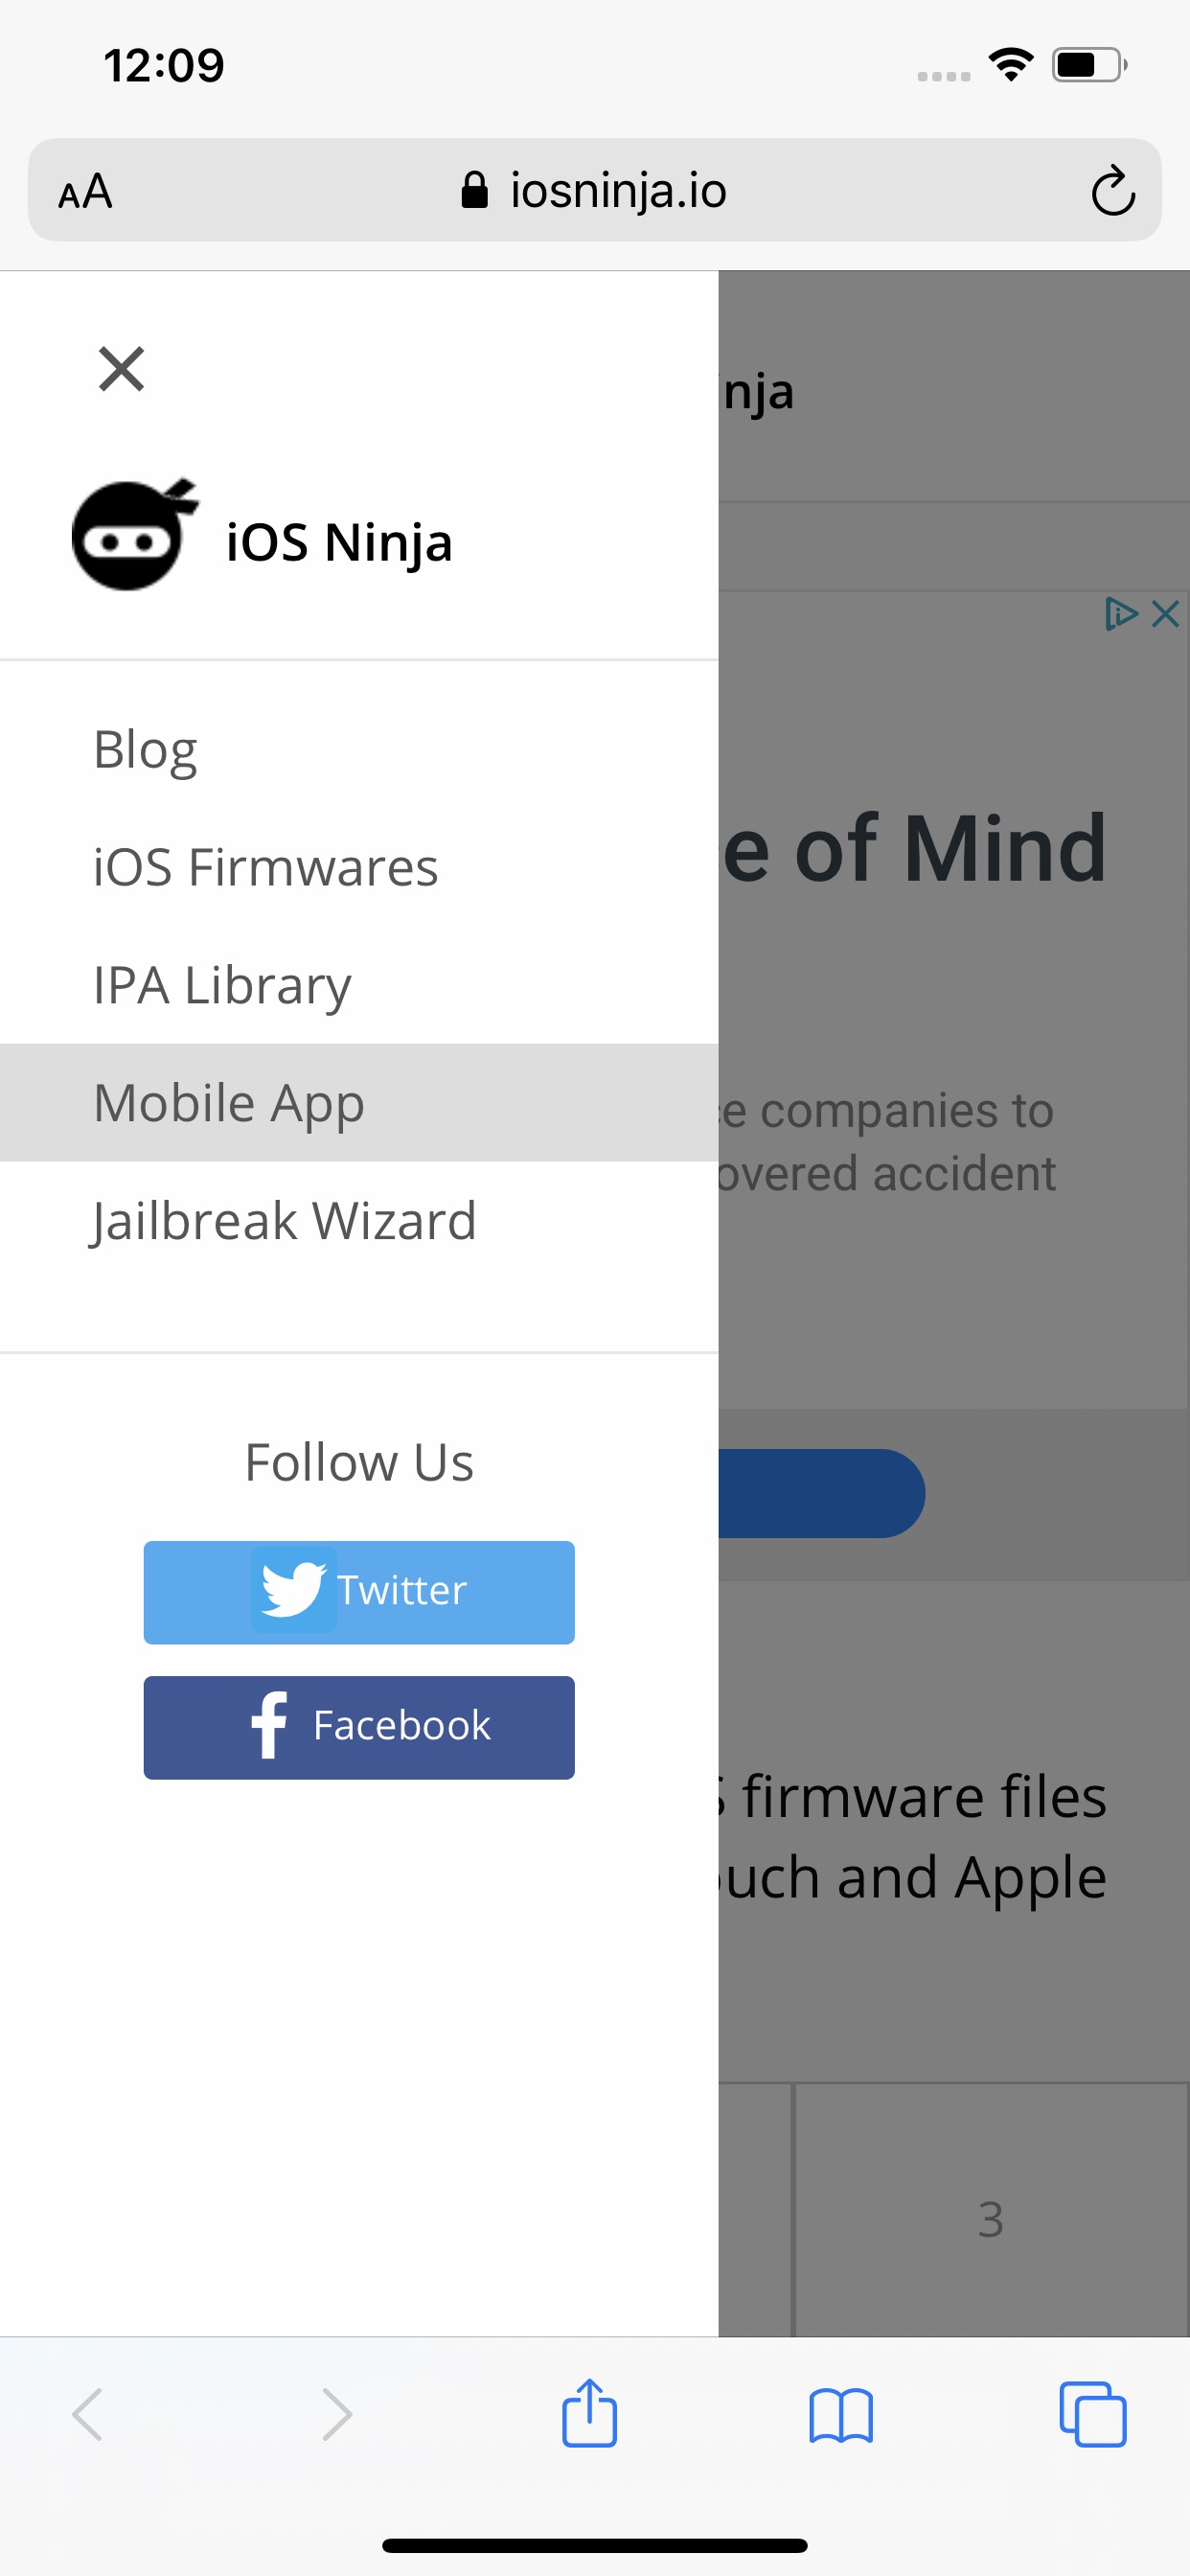 How to Jailbreak Your iPhone Using Unc0ver [iOS 13.3]